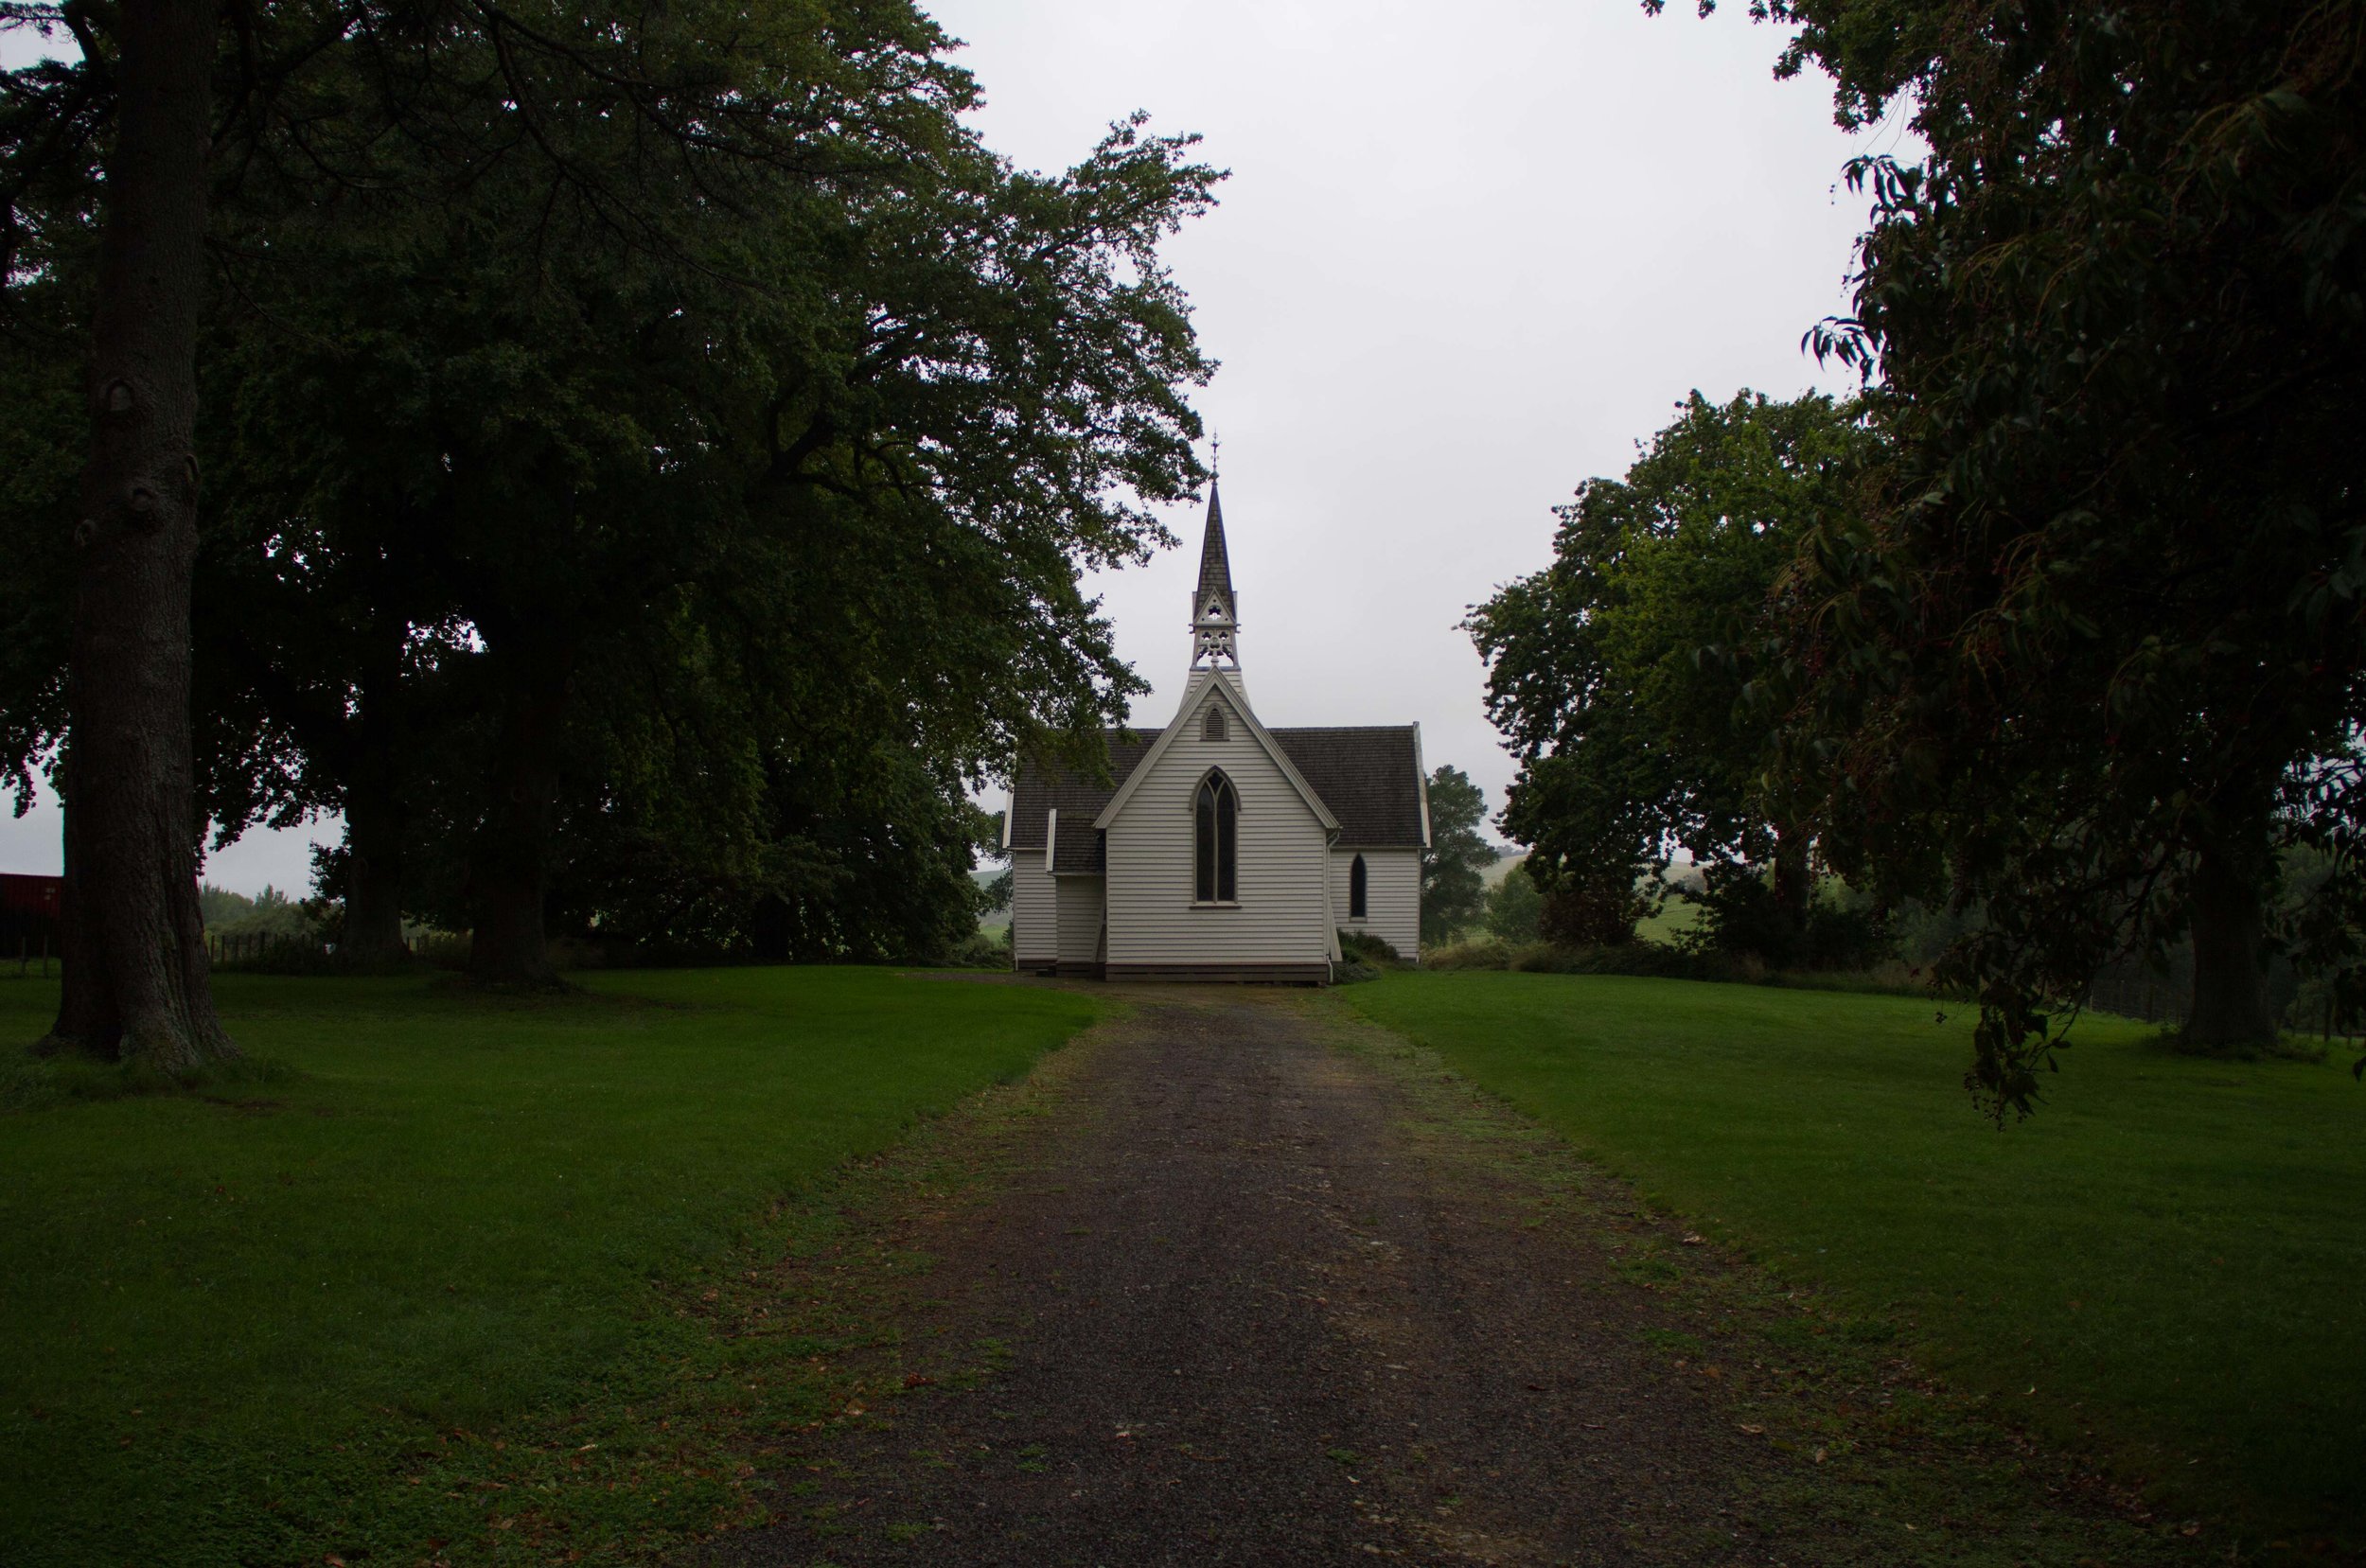 Church, Location forgotten, 2017